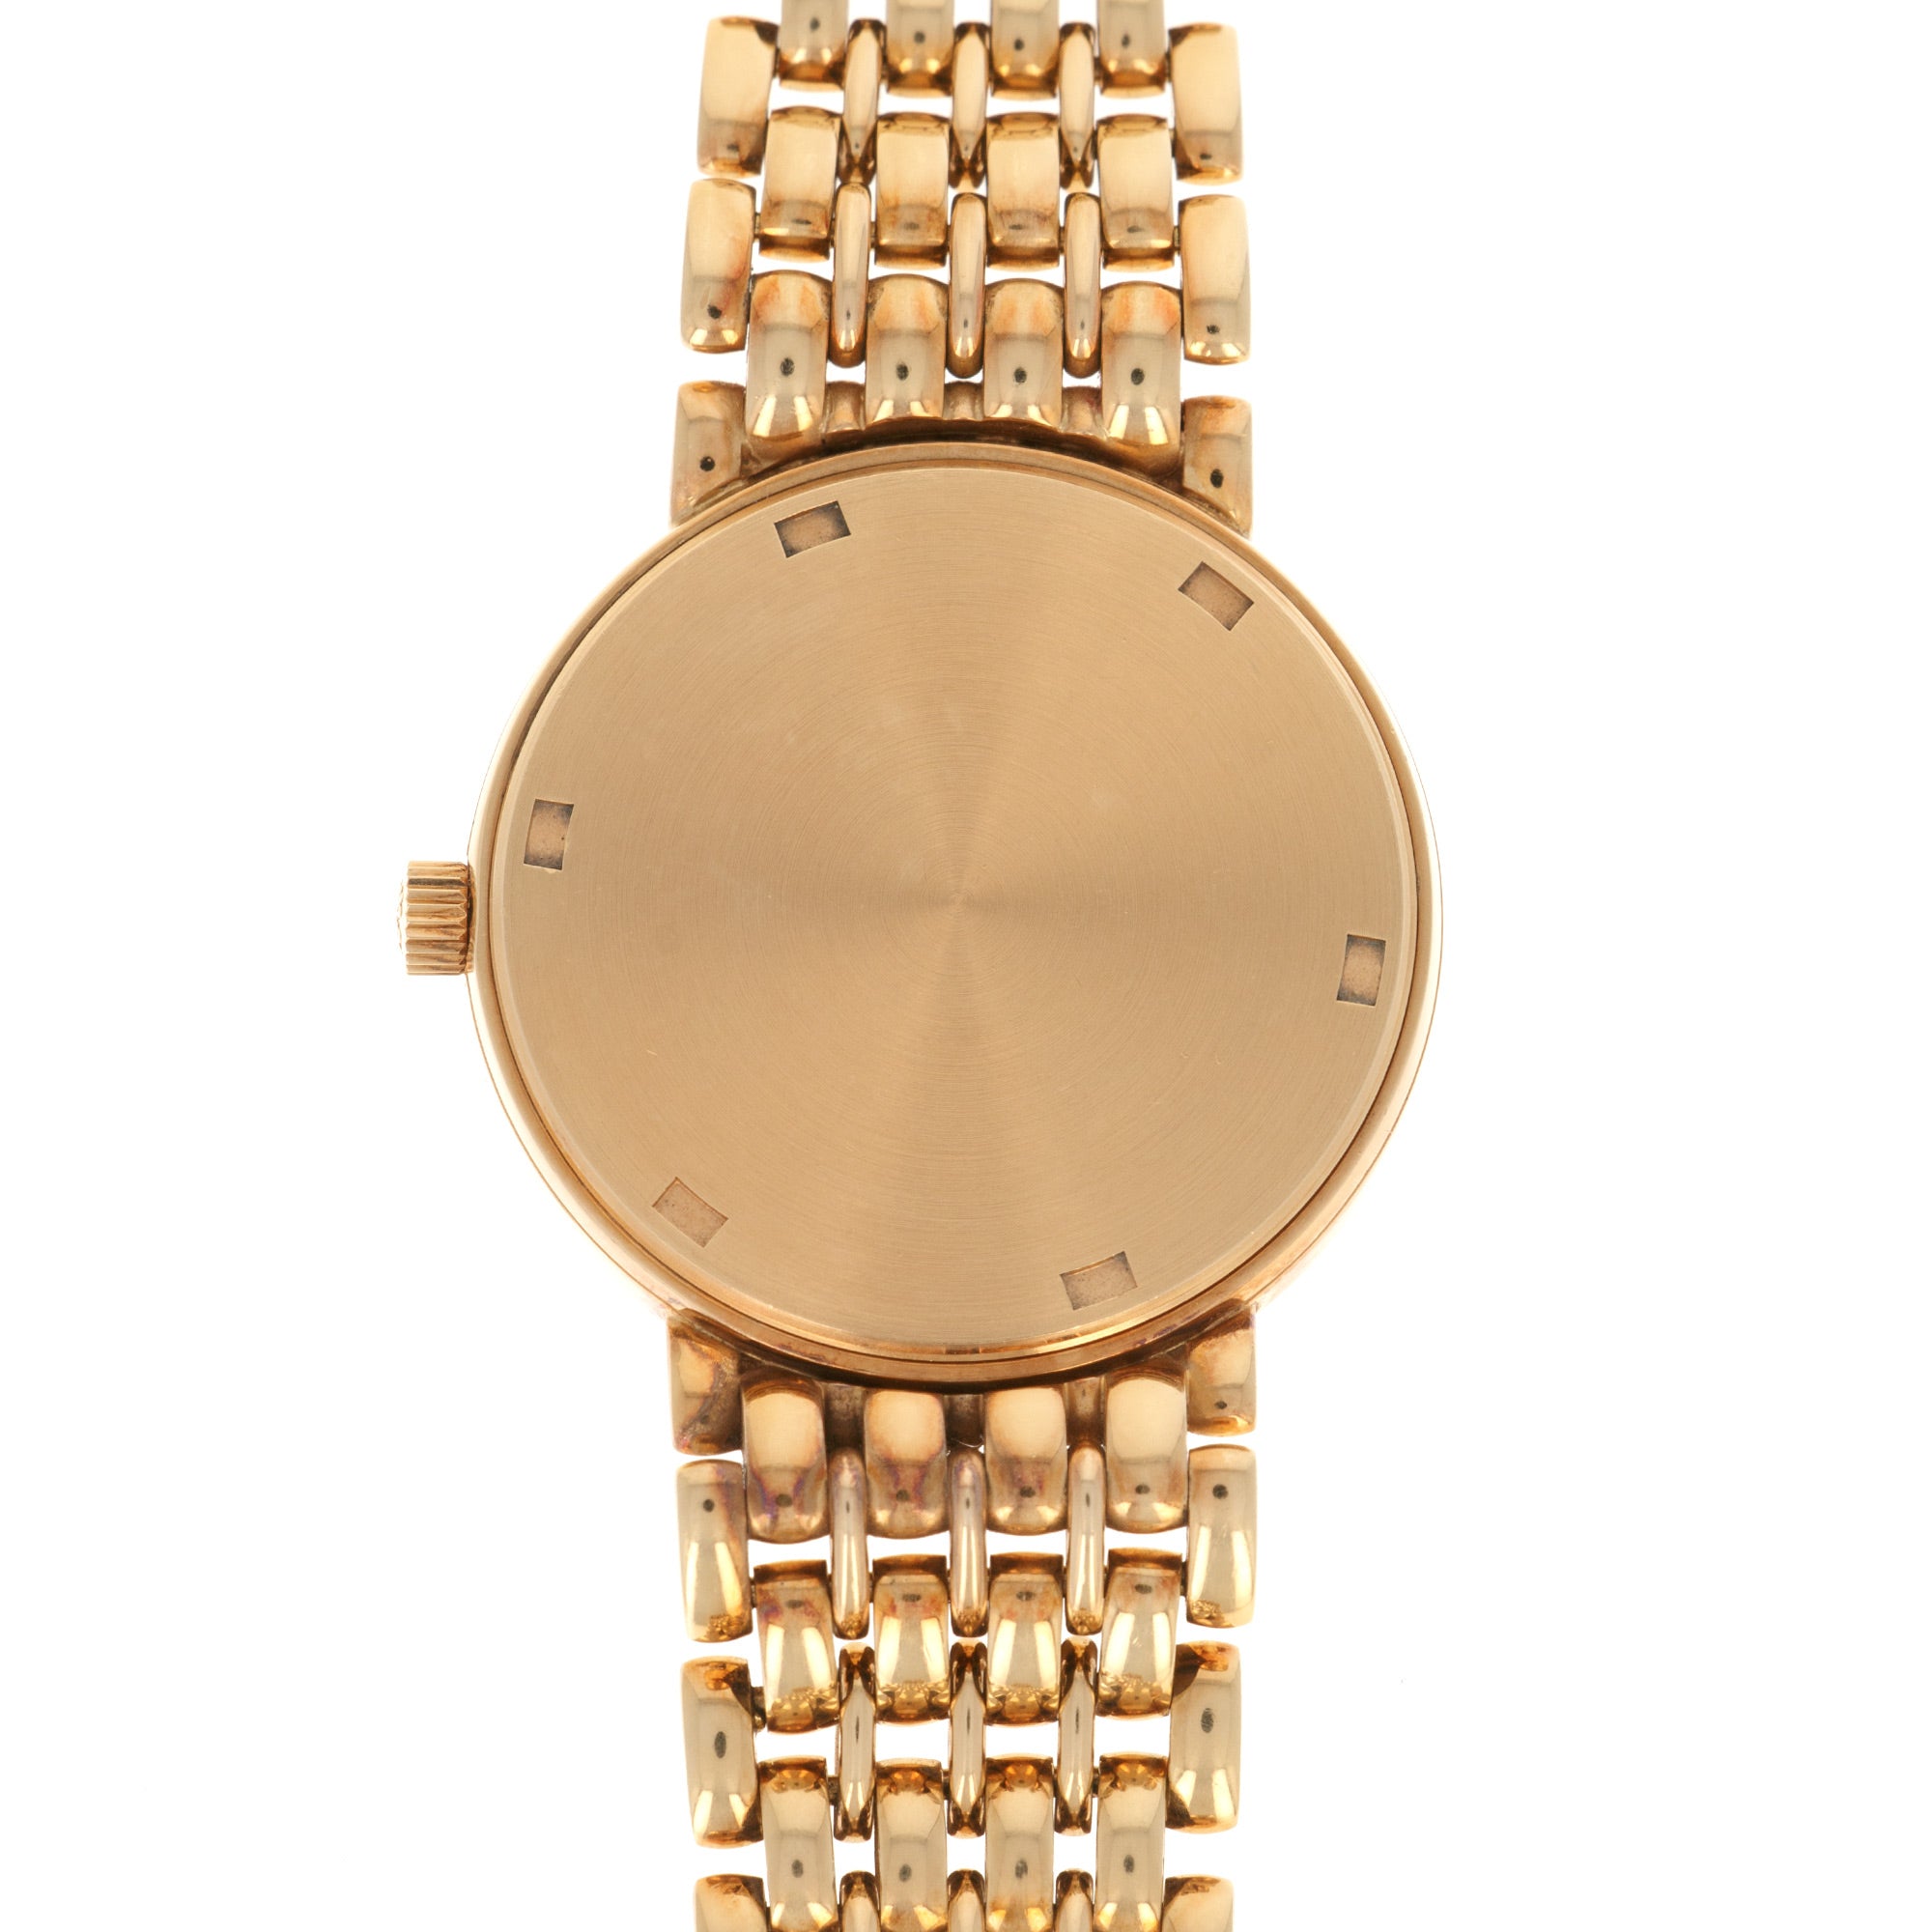 Patek Philippe - Patek Philippe Yellow Gold Calatrava Automatic Watch Ref. 3998 - The Keystone Watches